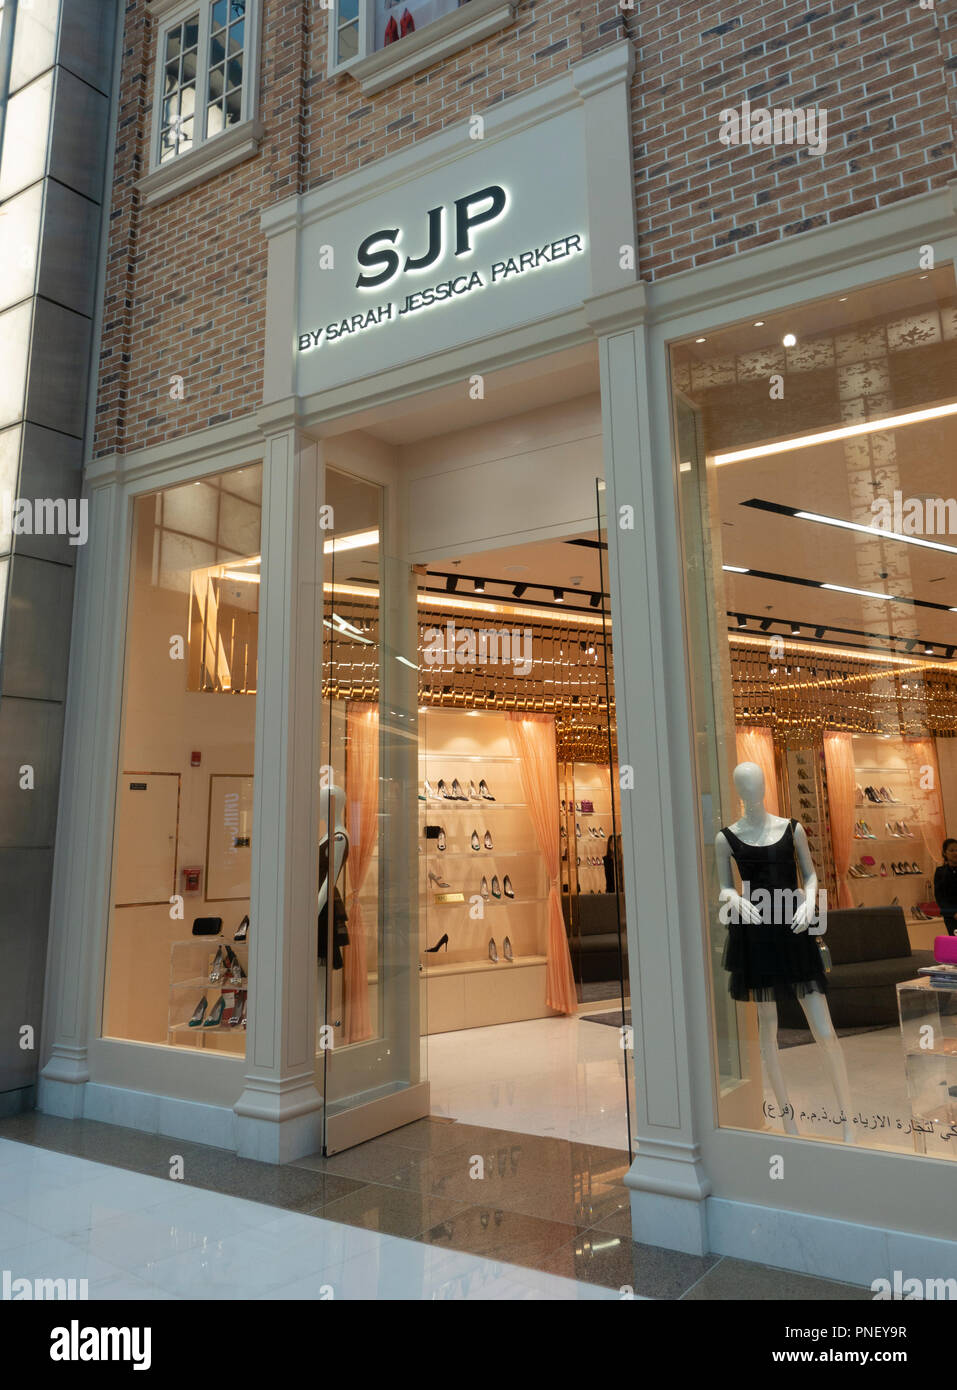 SJP Sarah Jessica Parker shoe store 